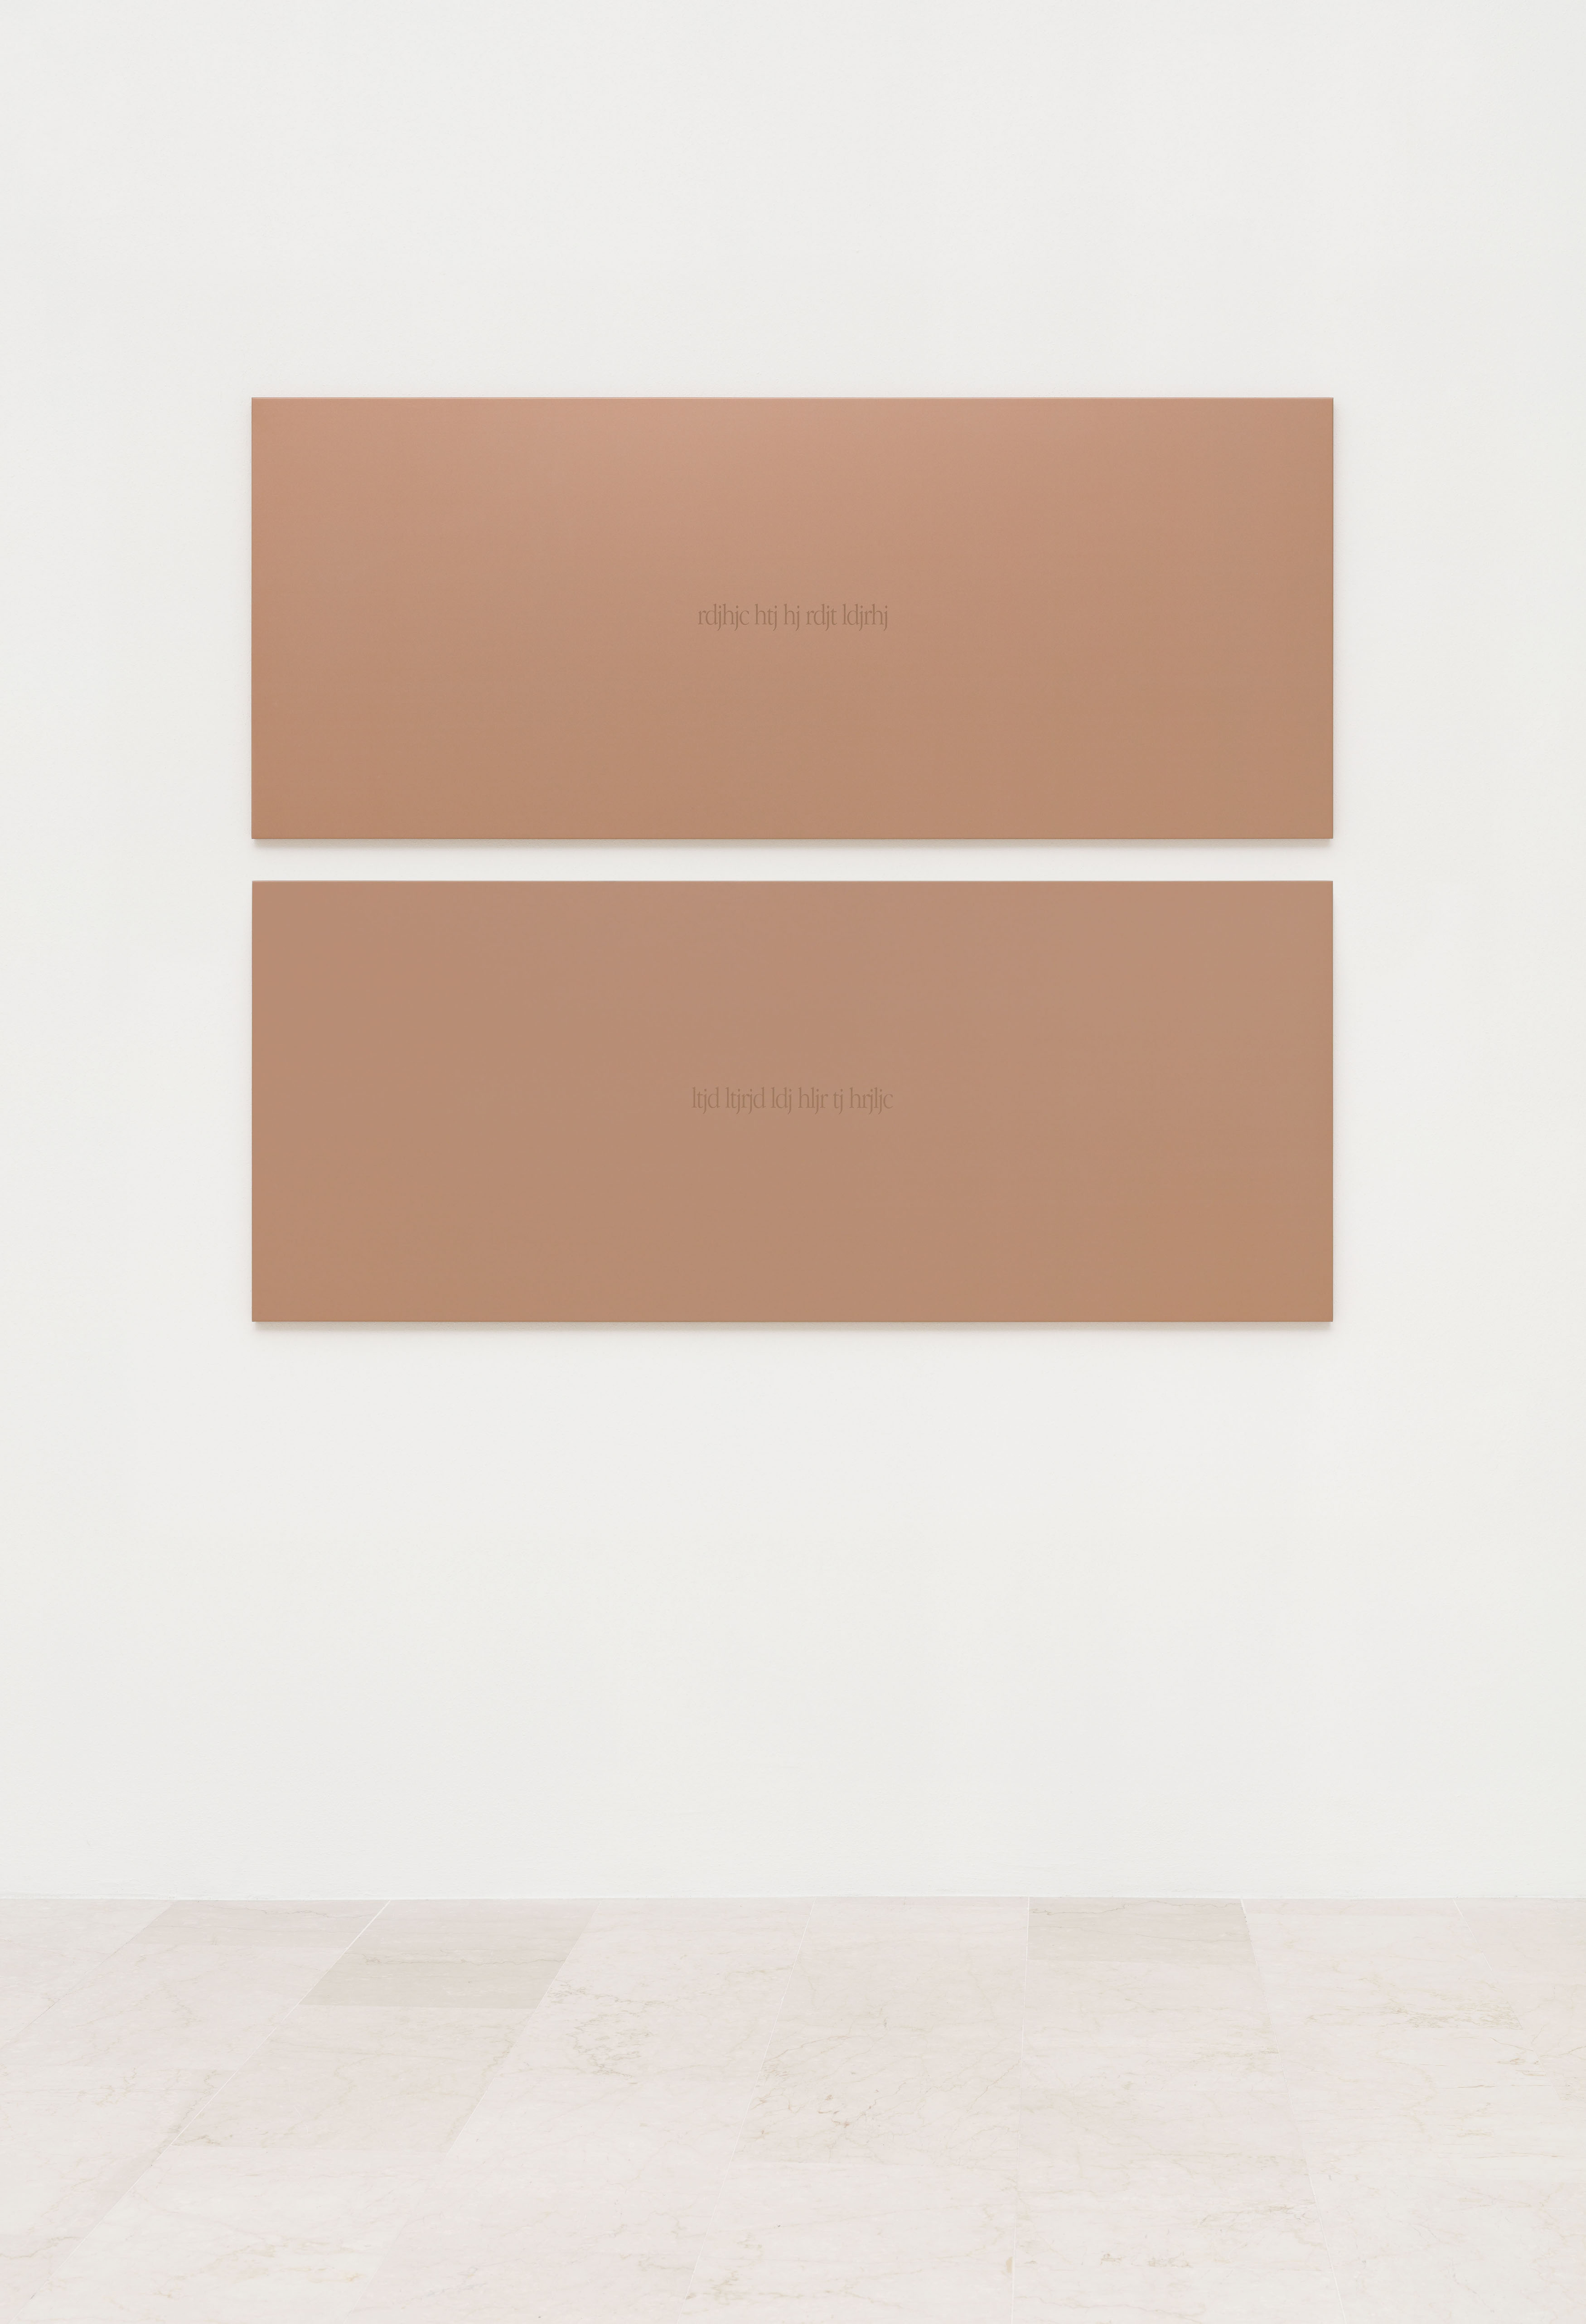 Irma Blank, Global Writings, La lingua ritrovata, poesia minima, 29-2-2004, digital writing and silkscreen print on copper-coated aluminium, diptych, 63 x154 cm each, 2004